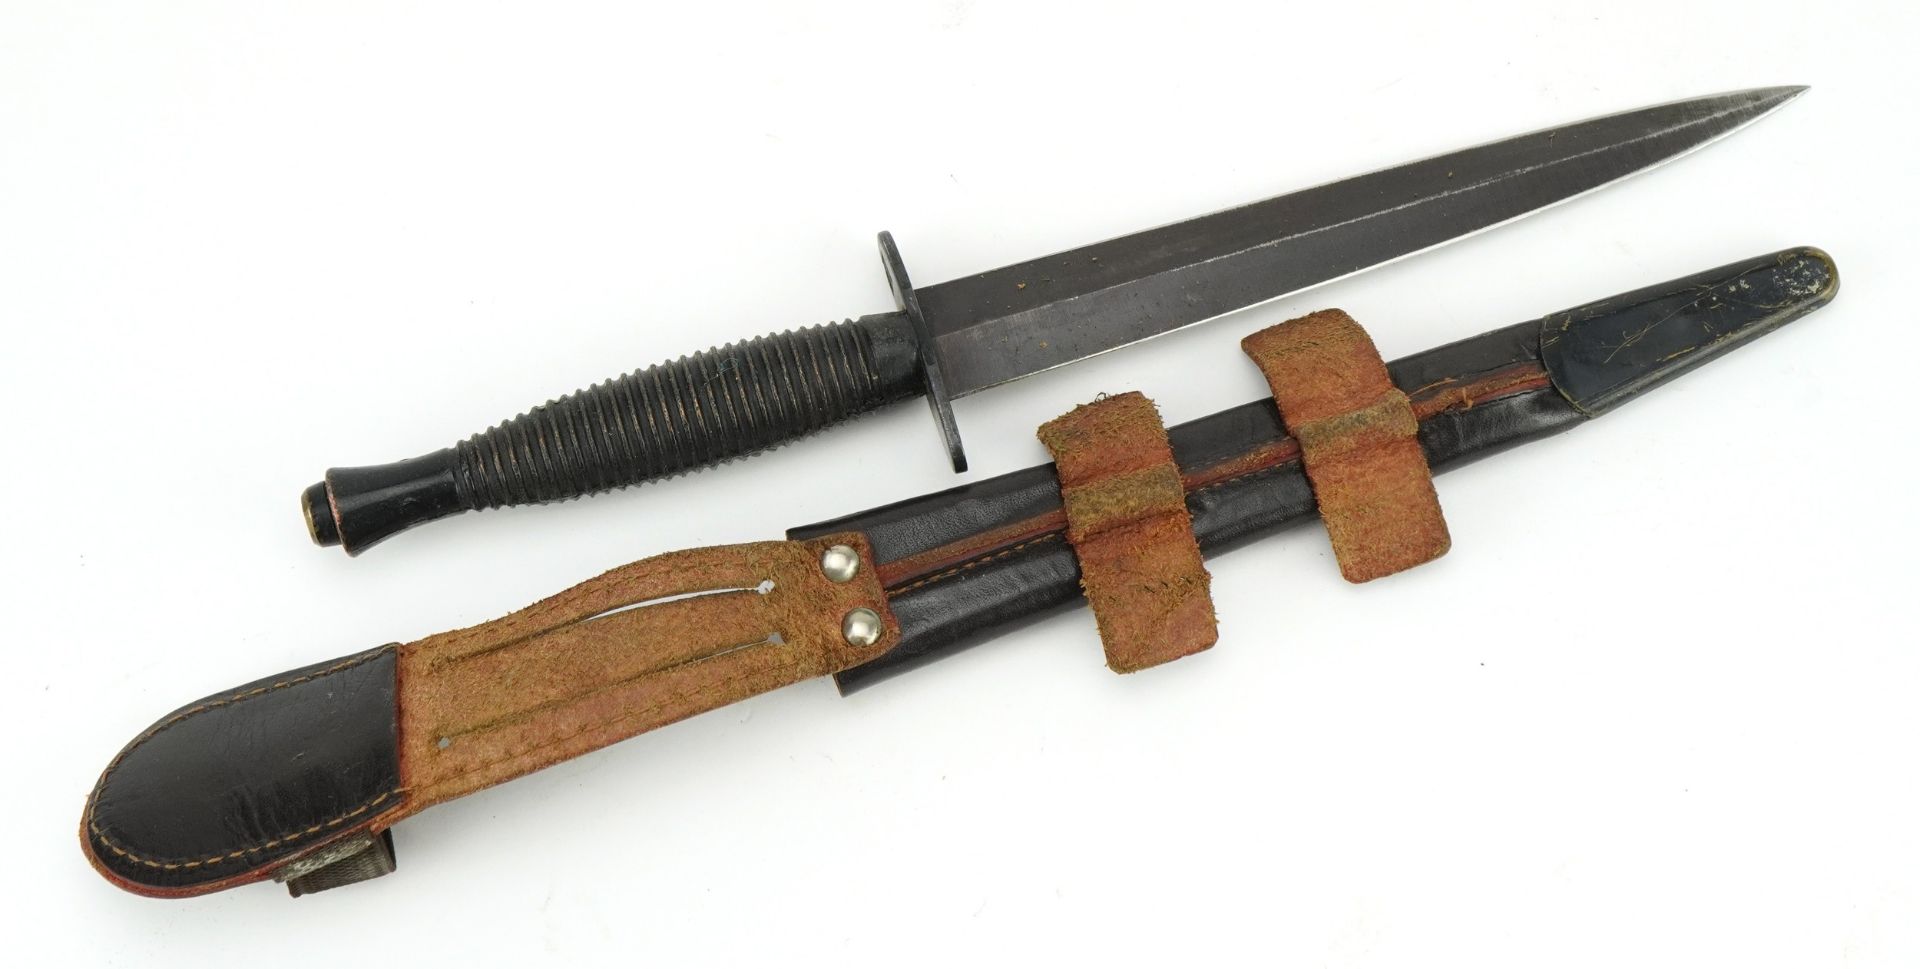 British military interest Fairbairn Sykes fighting knife with leather sheath impressed William - Bild 2 aus 2